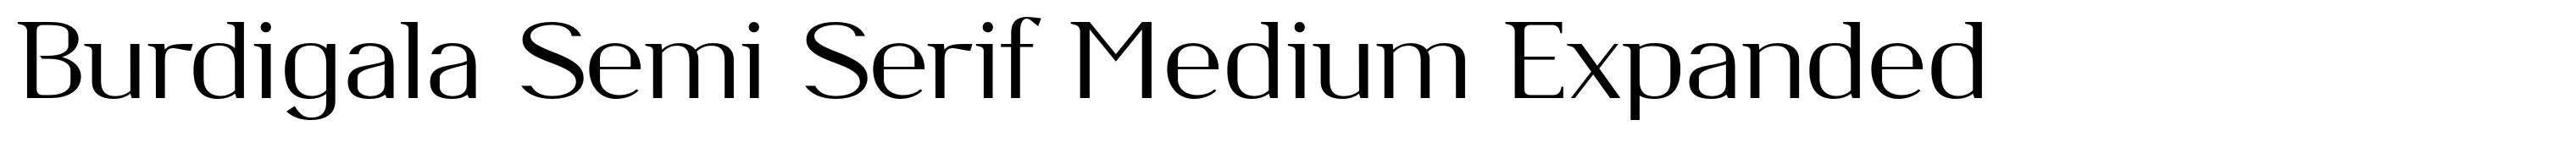 Burdigala Semi Serif Medium Expanded